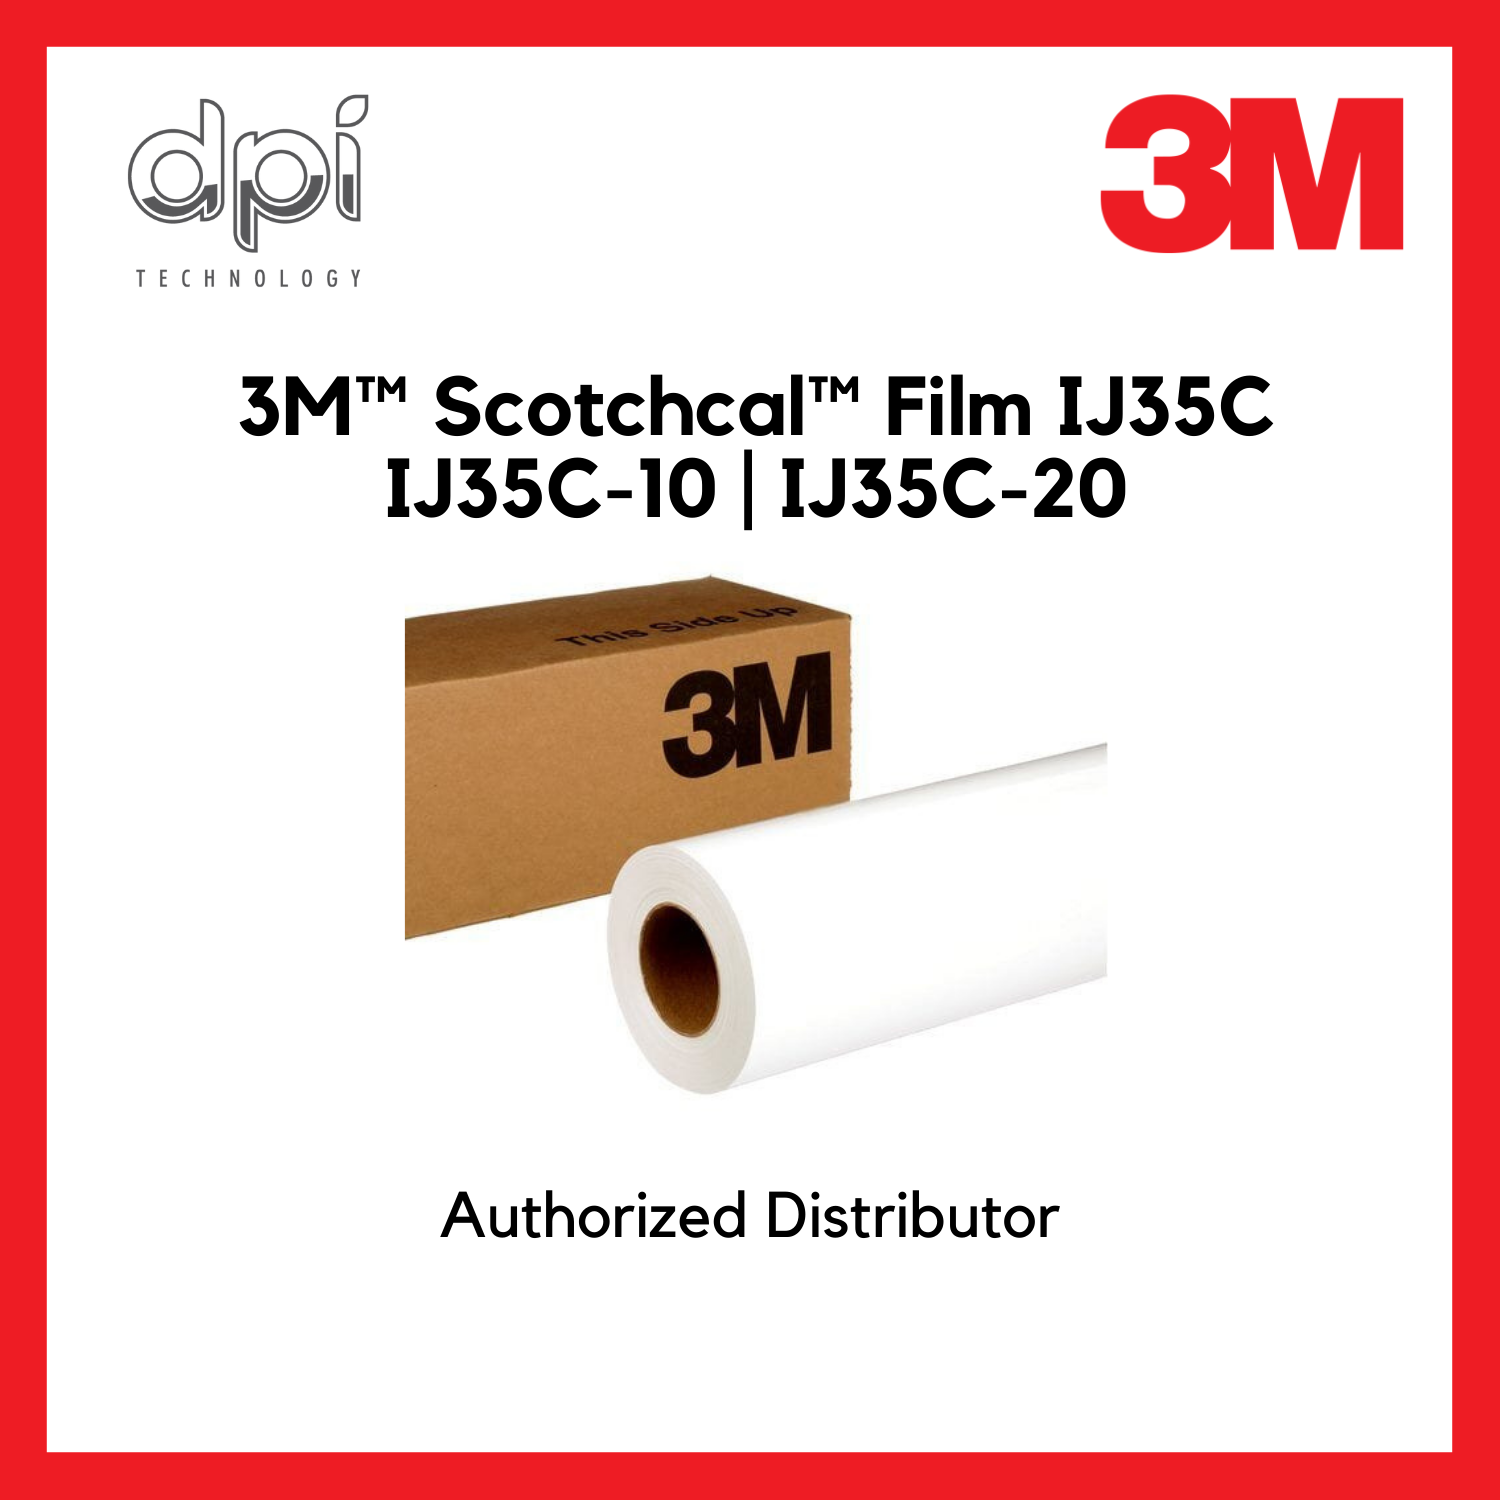 3M Scotchcal Film IJ35C